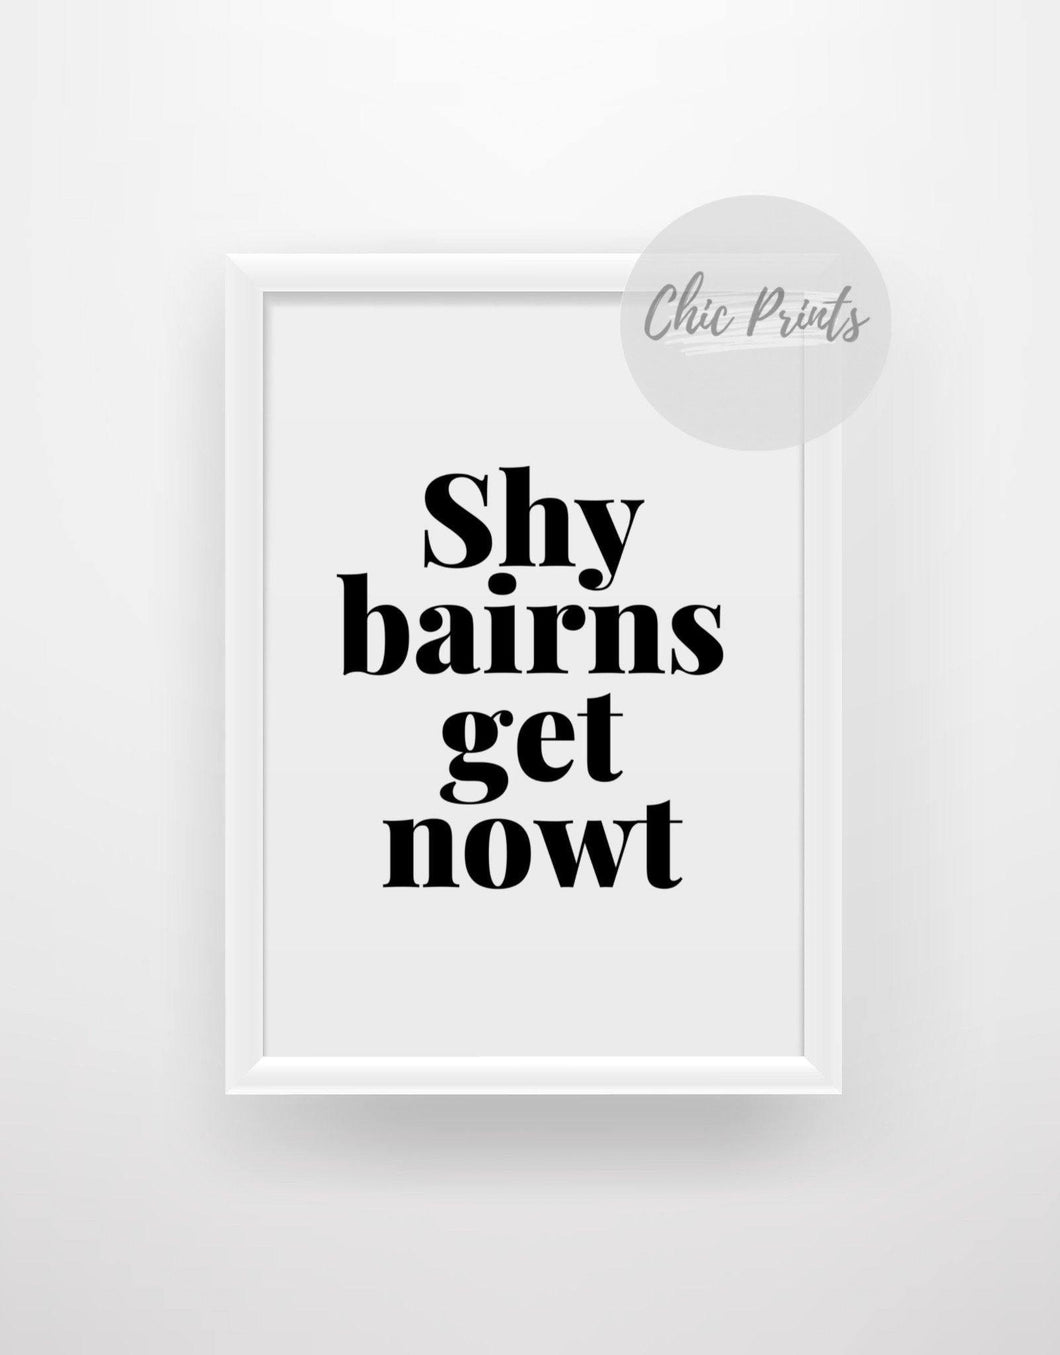 Shy bairns get nowt - Chic Prints